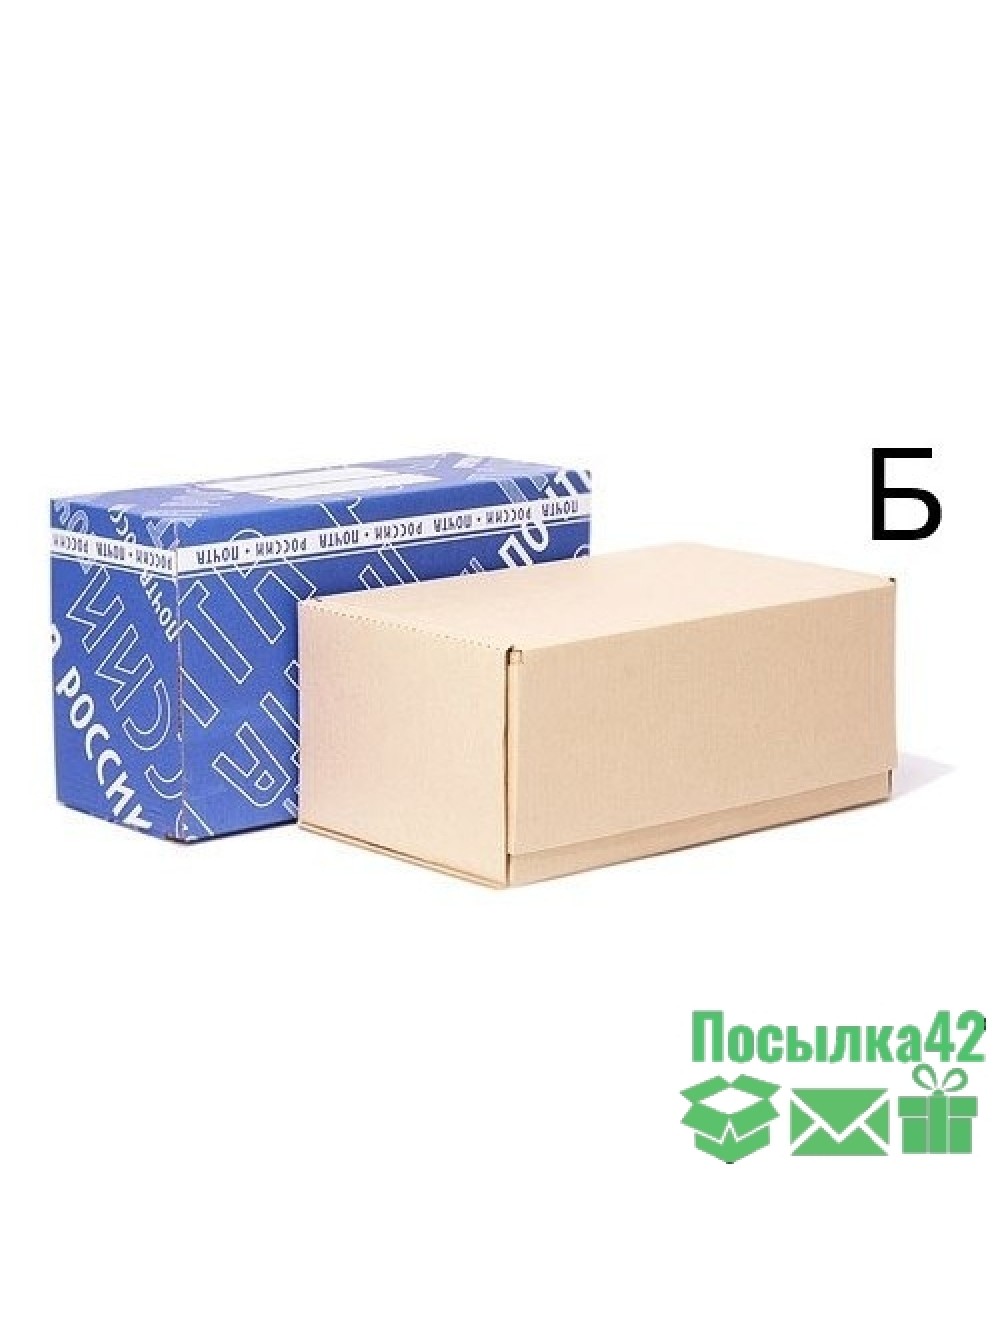 Почтовая коробка Тип б, №5, (425*265*190)